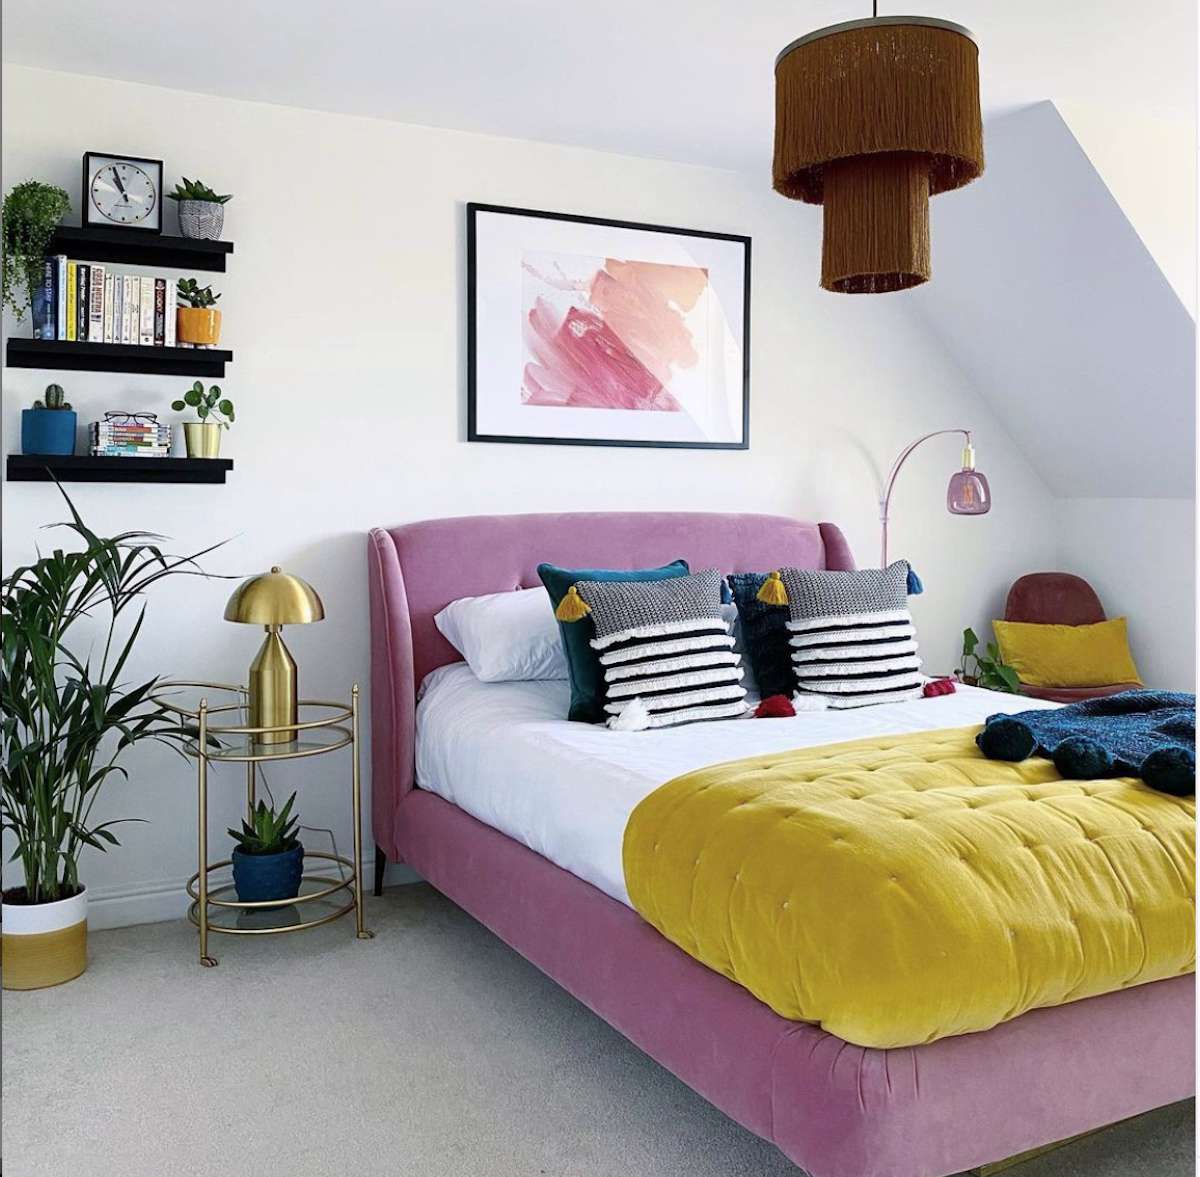 dormitorio con paredes blancas, somier morado claro, edredón amarillo, acentos de cristal dorado y morado